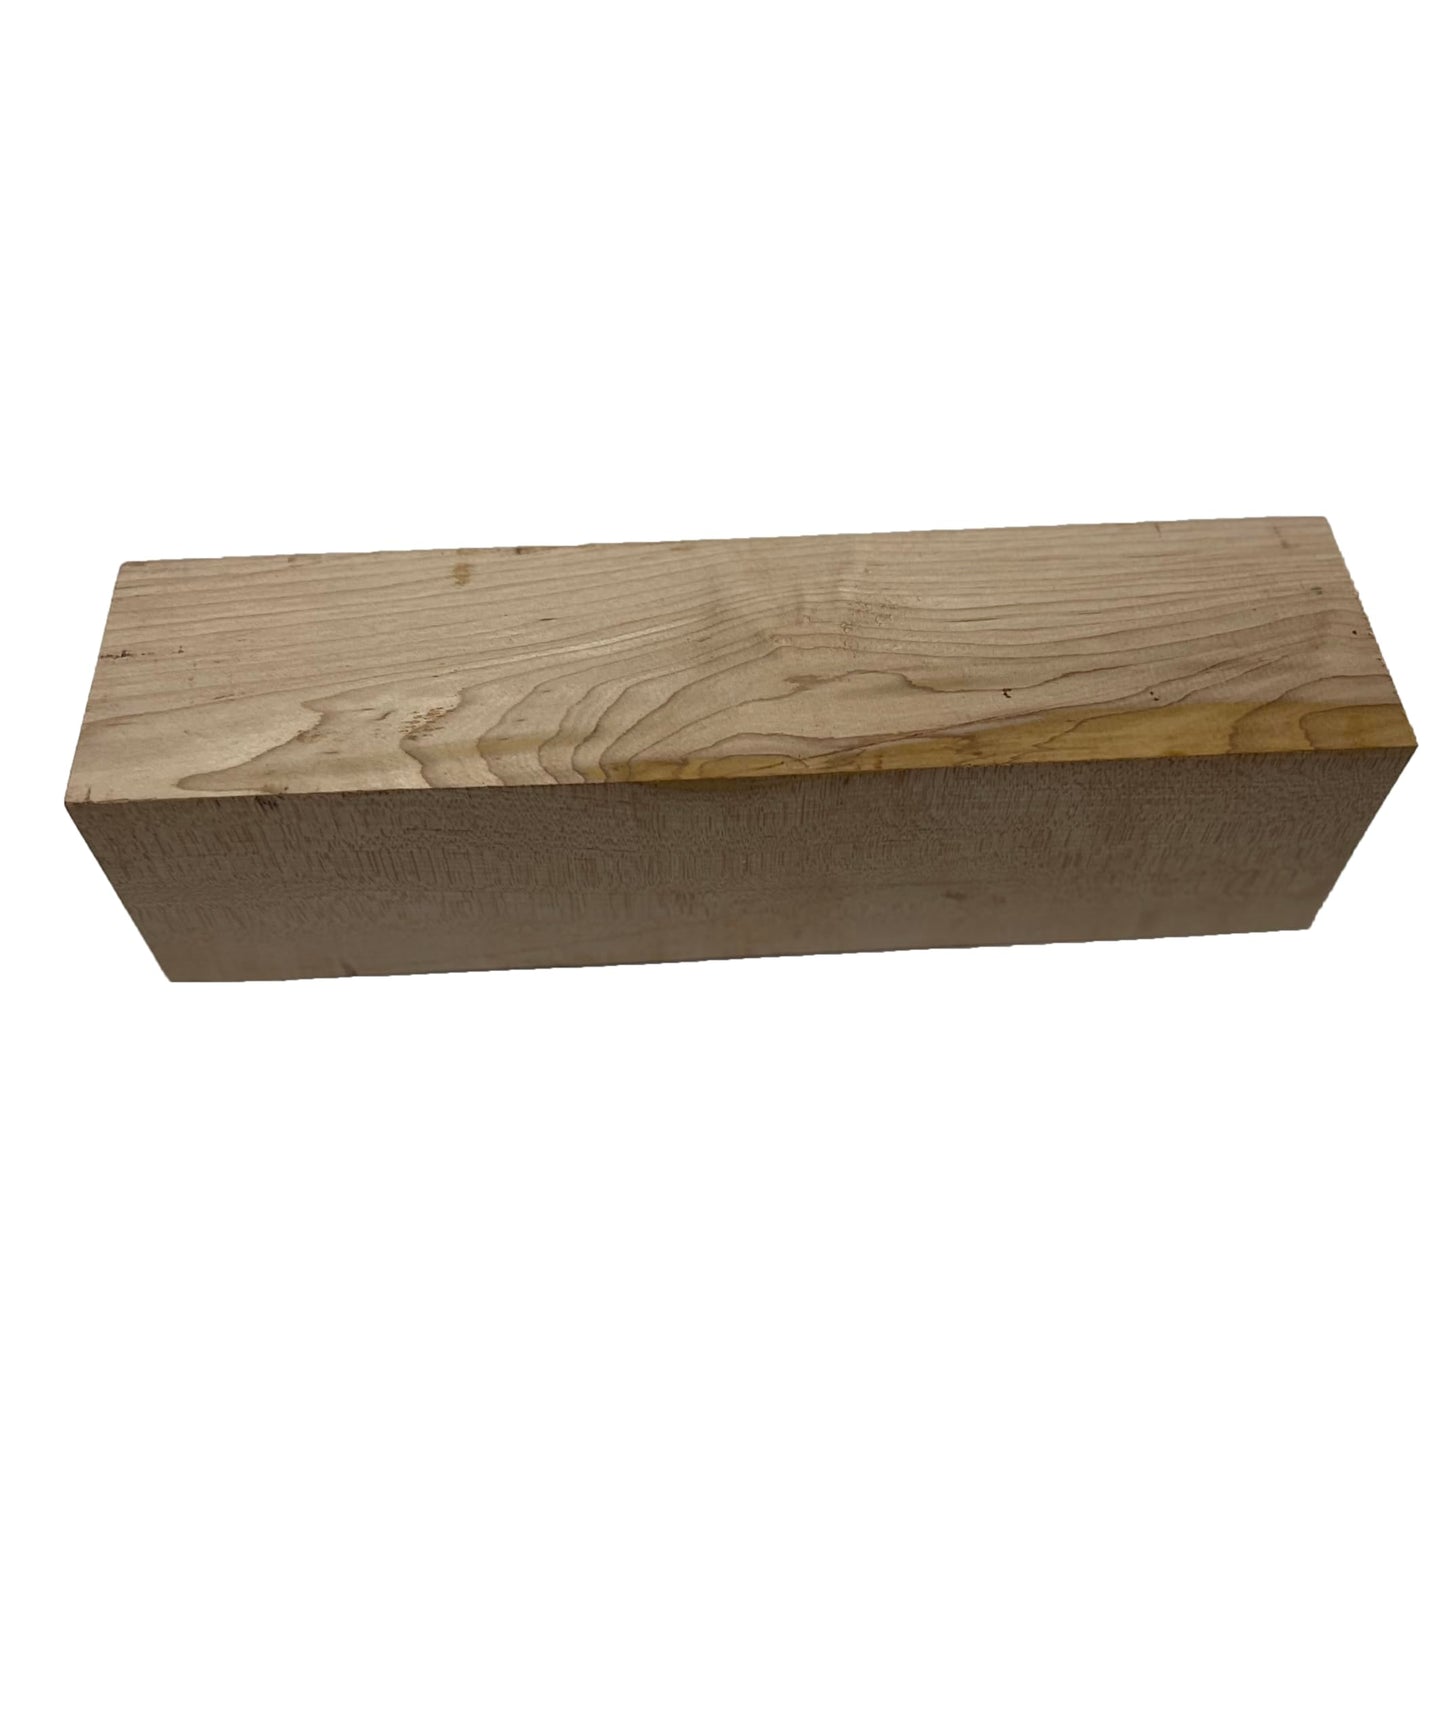 Exotic Wood Zone's Hardmaple Pepper Mill Blank | Turning Wood Blanks 3" x 3" | Square Wood Blocks | Kiln Dried Wood (5, 3" x 3" x 12")